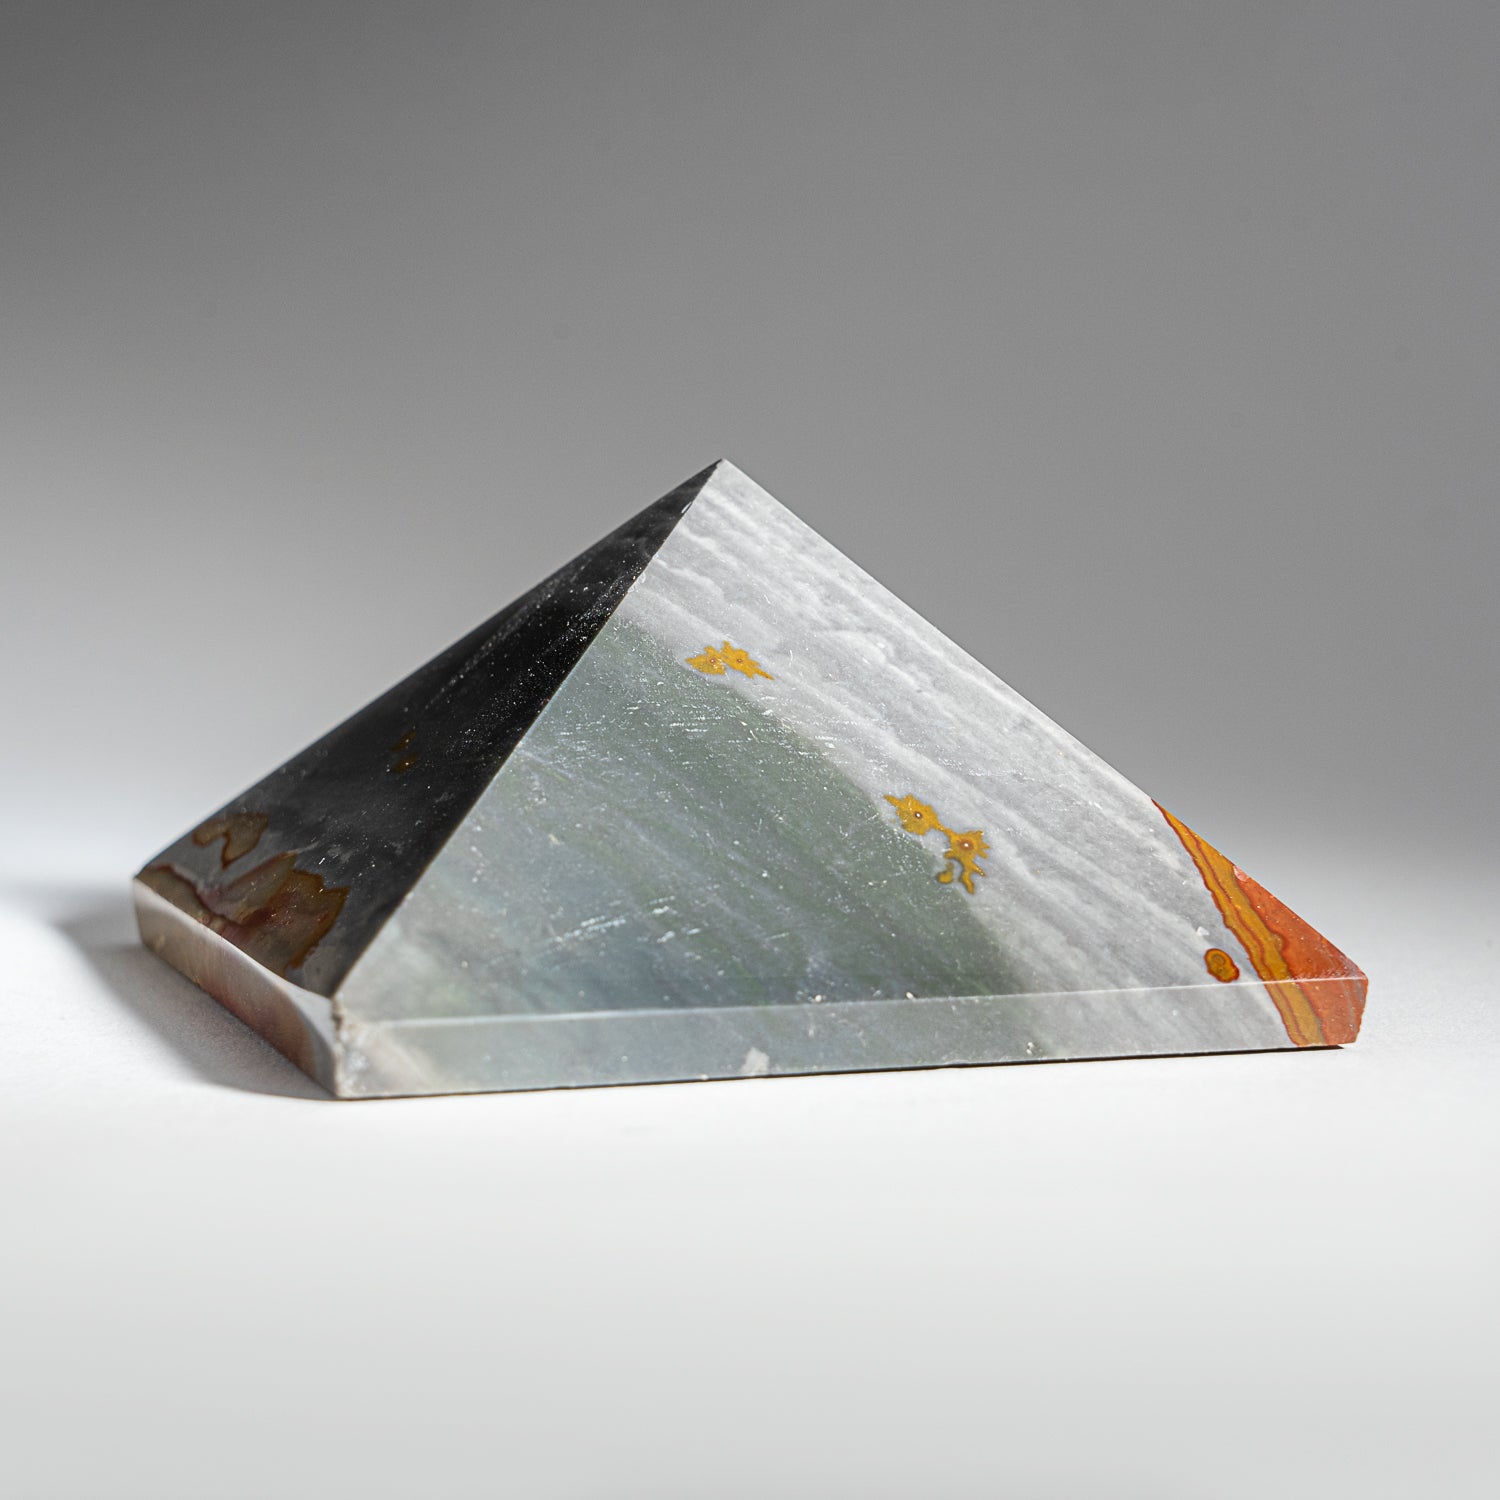 Polished Polychrome Pyramid from Madagascar (1 lb)